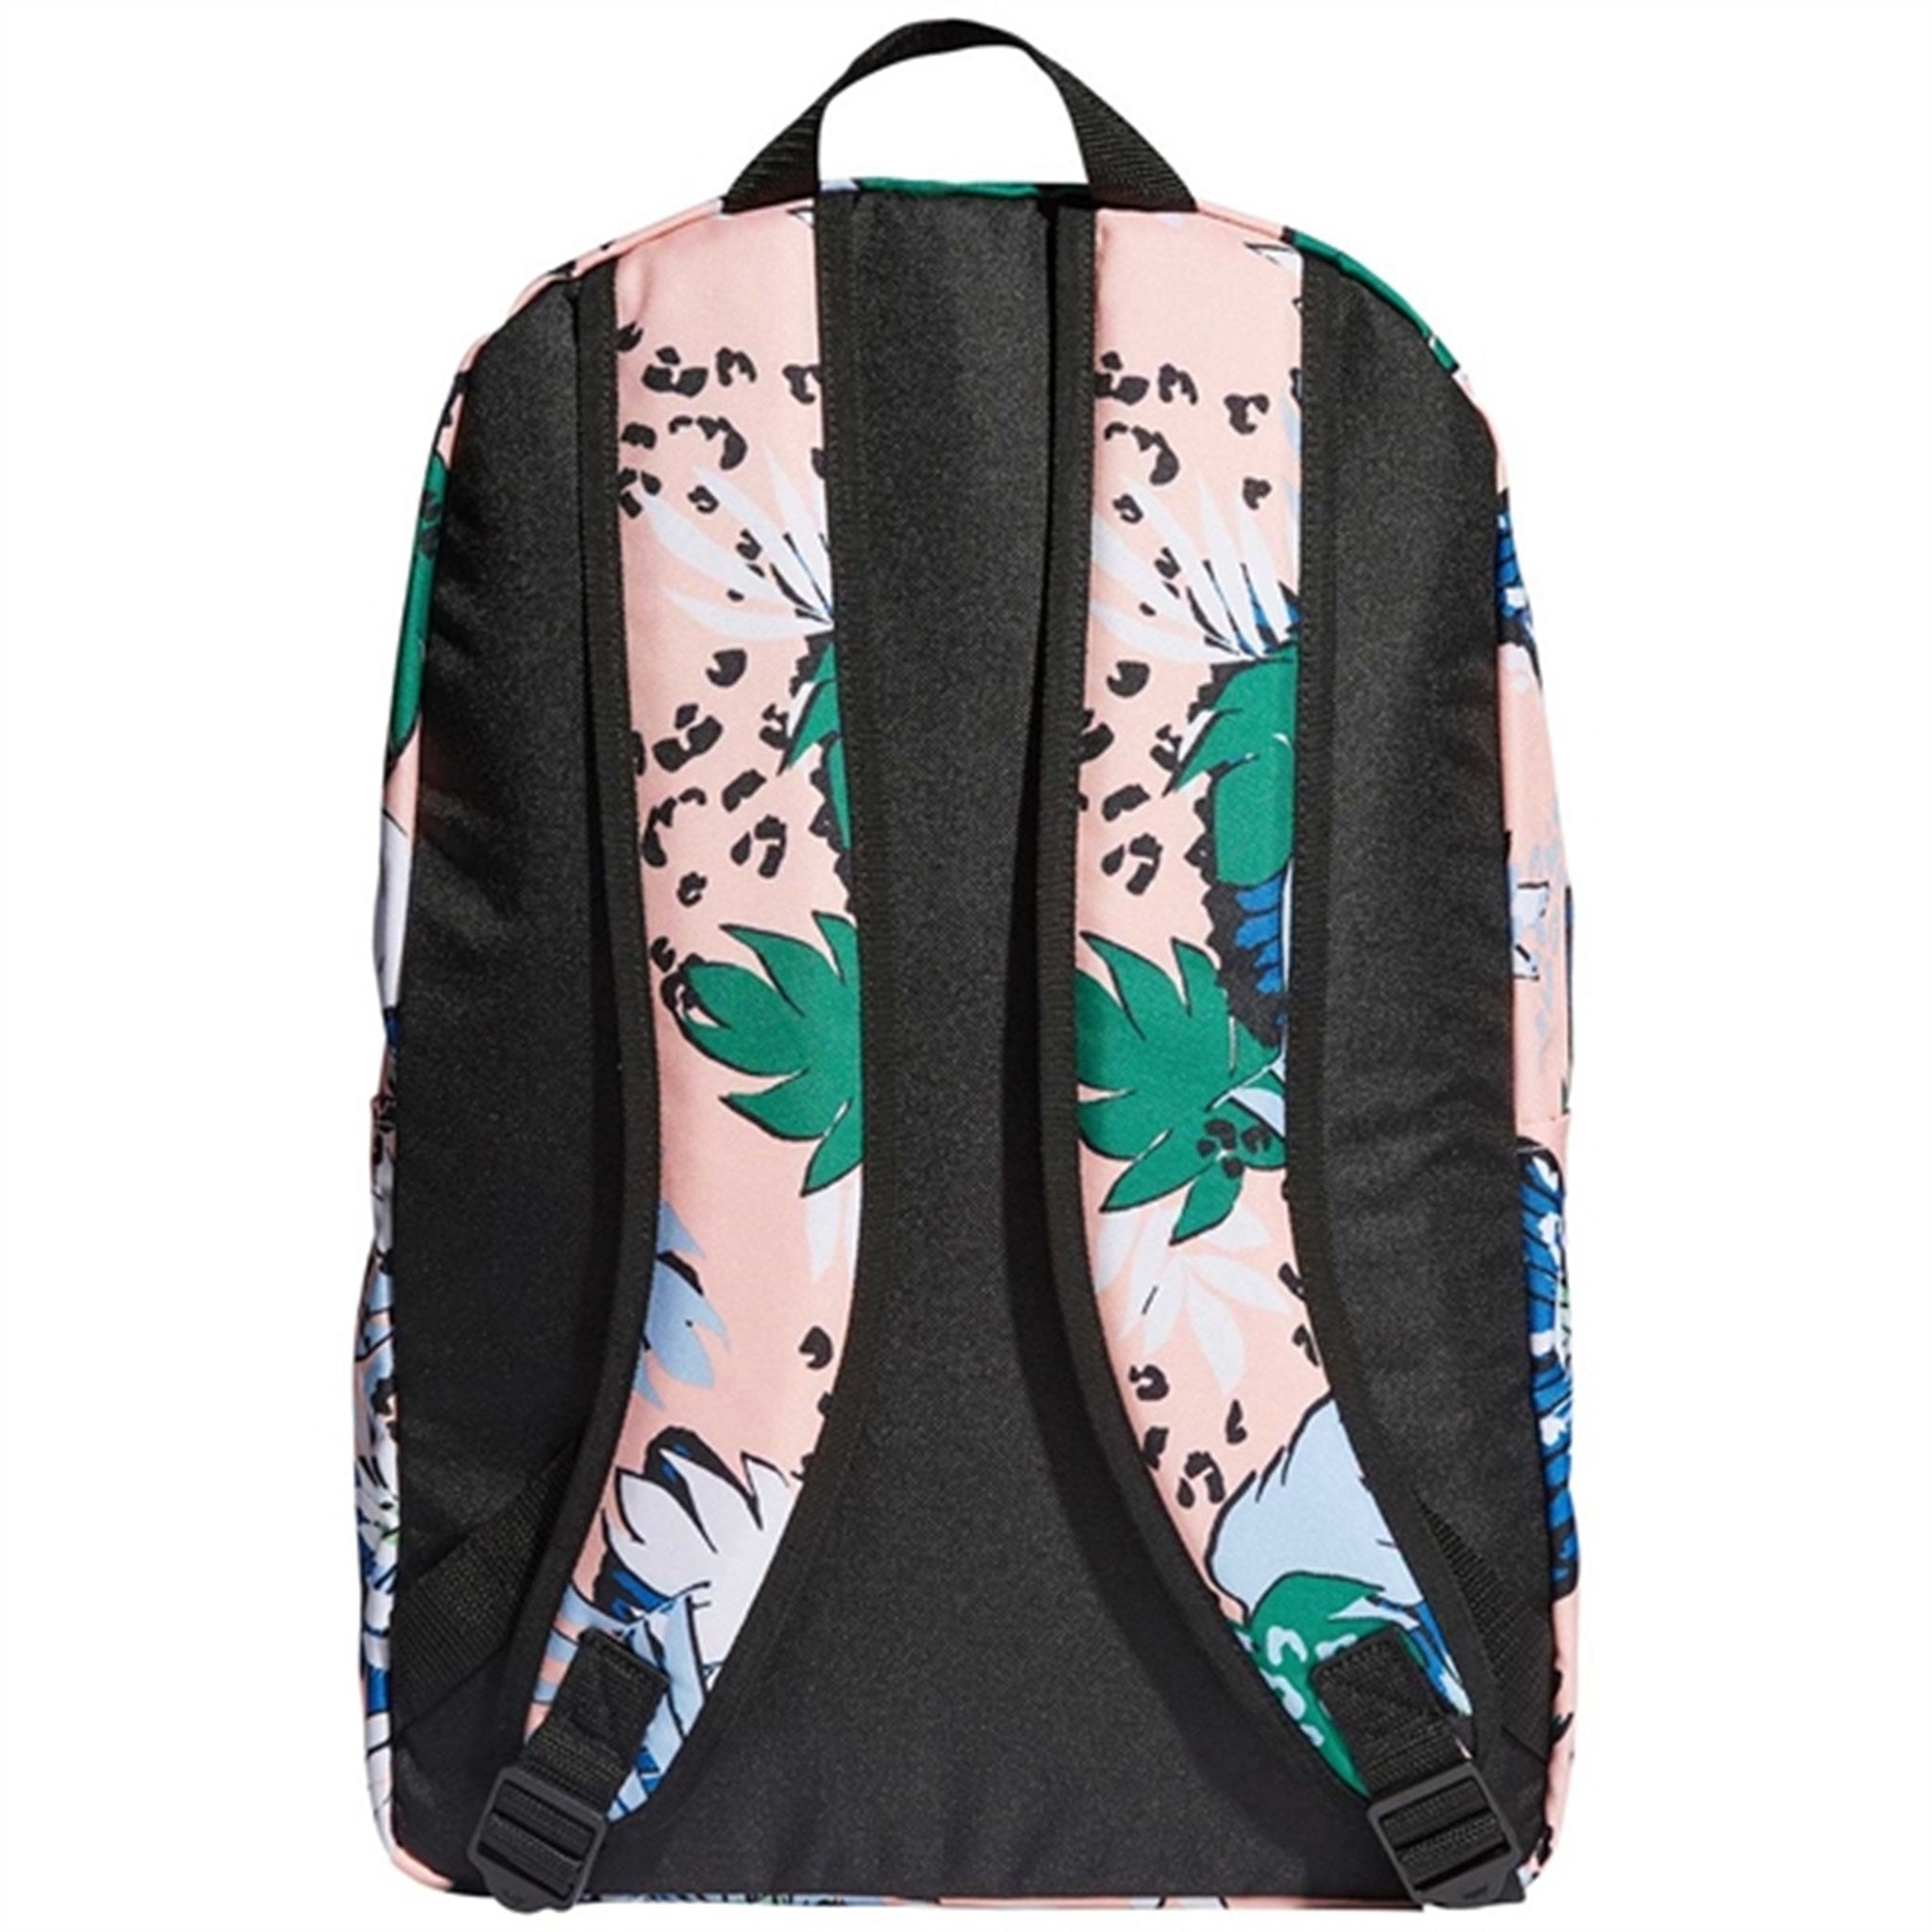 adidas Backpack Her Studio BP Haze Coral White Black 4